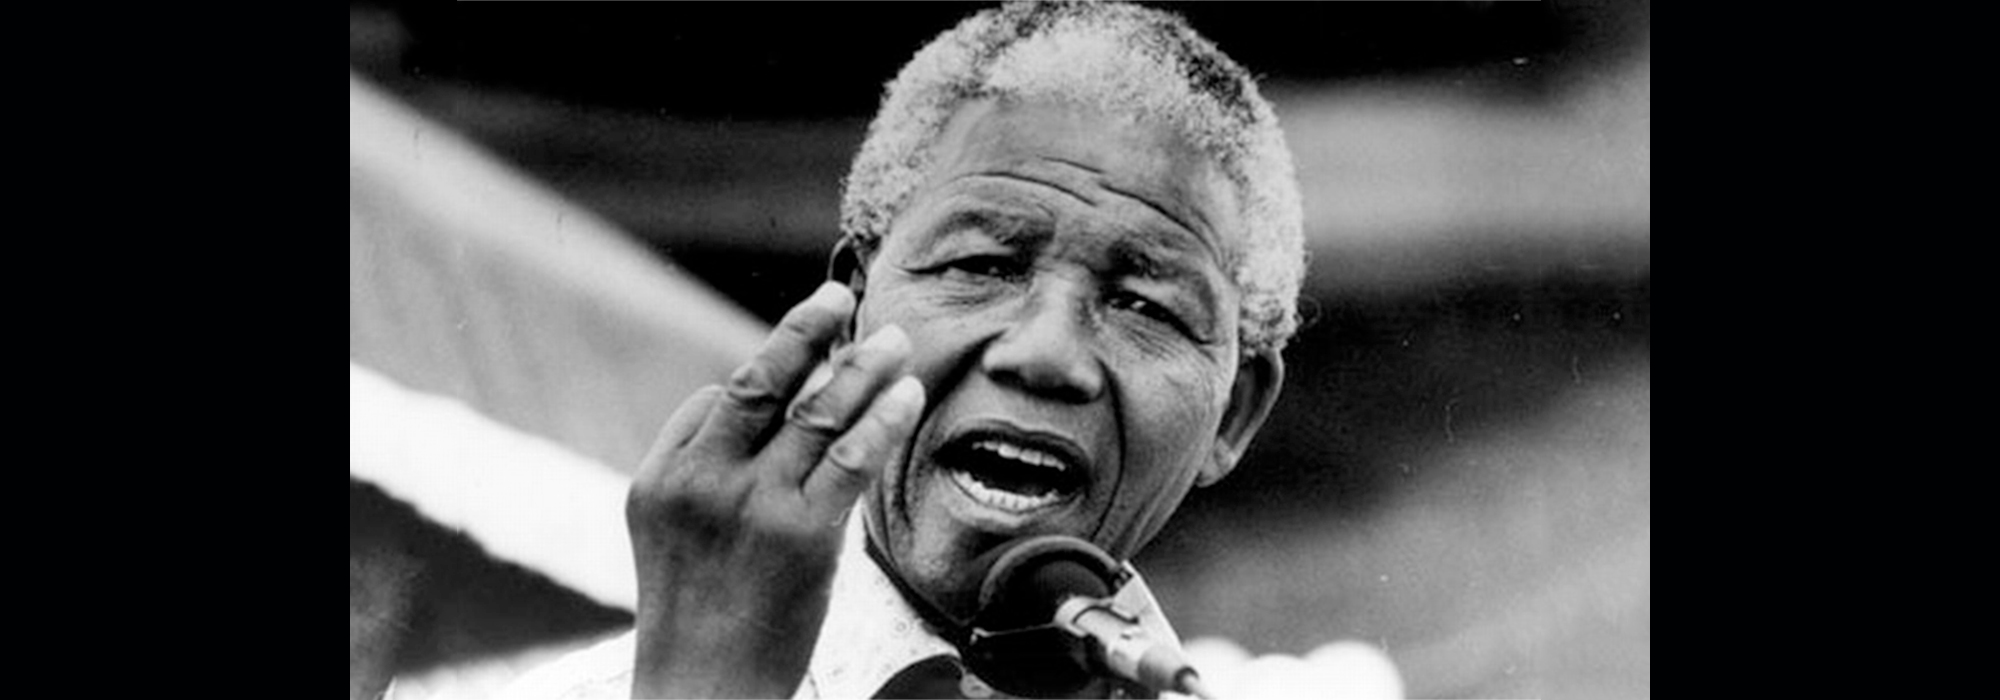 Those who got inspired - Nelson Mandela